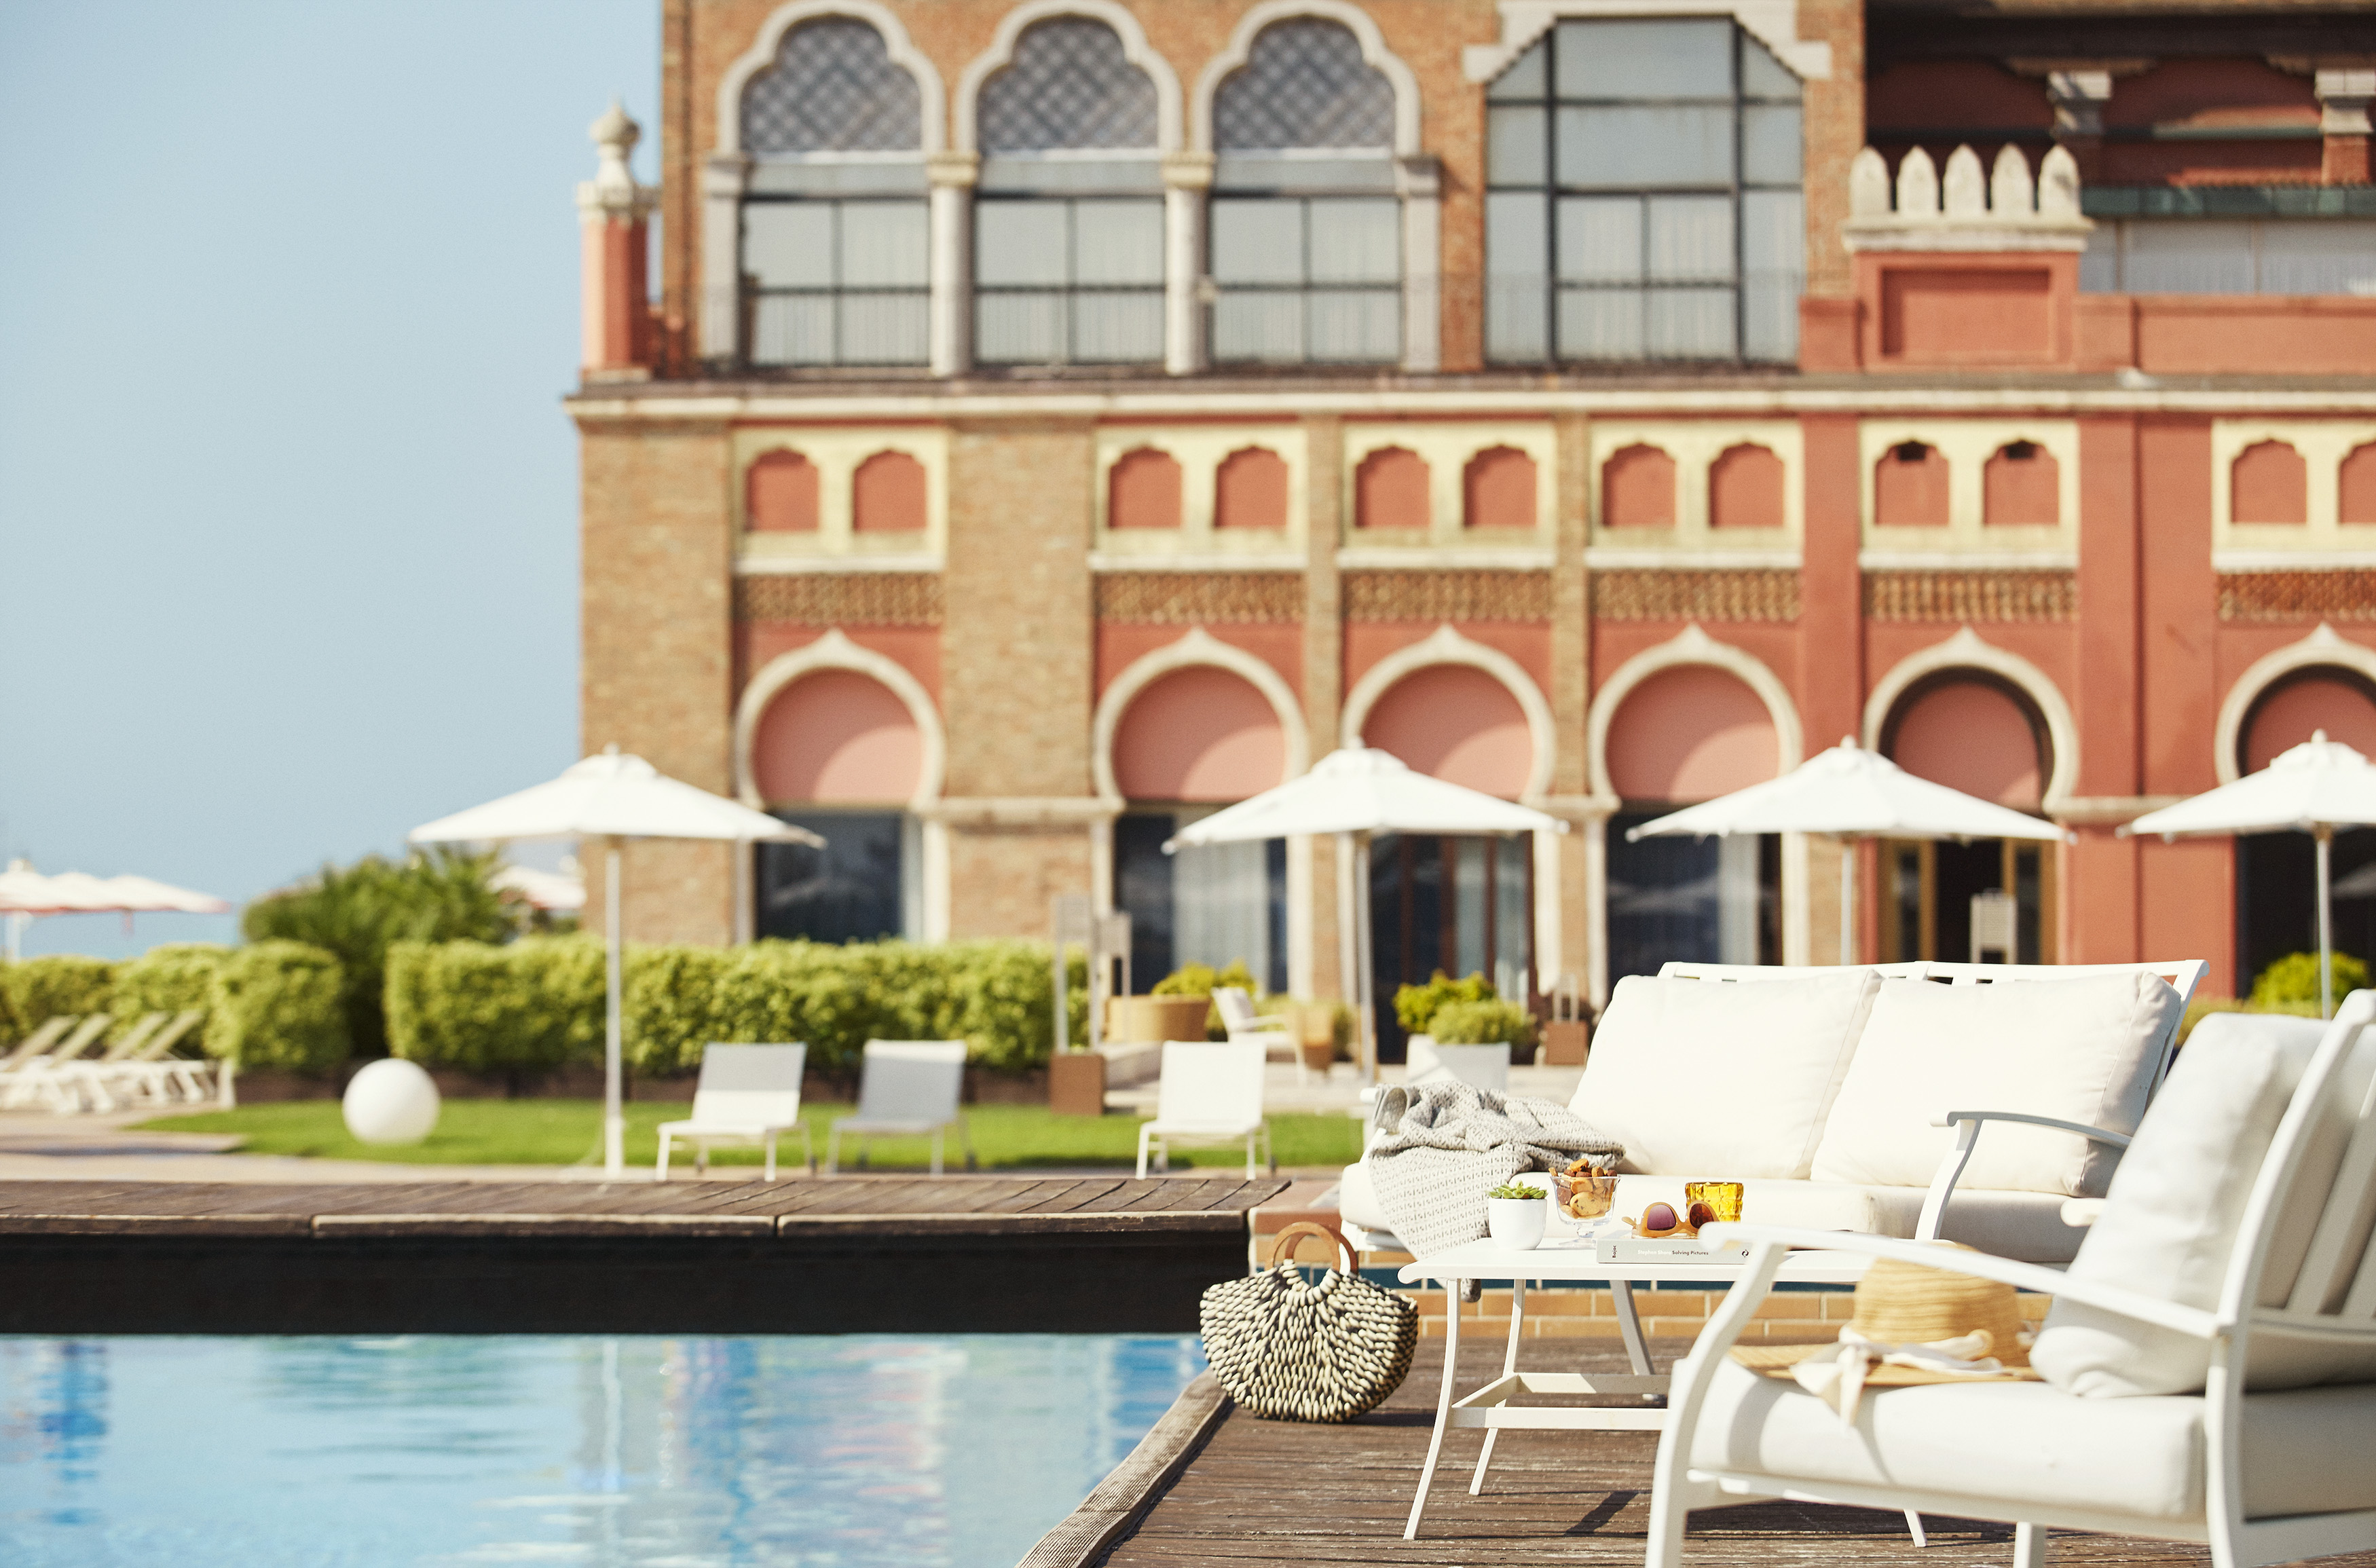 Hotel Excelsior Venice Lido Resort, Pool - Luxury Hospitality PR uschi liebl pr